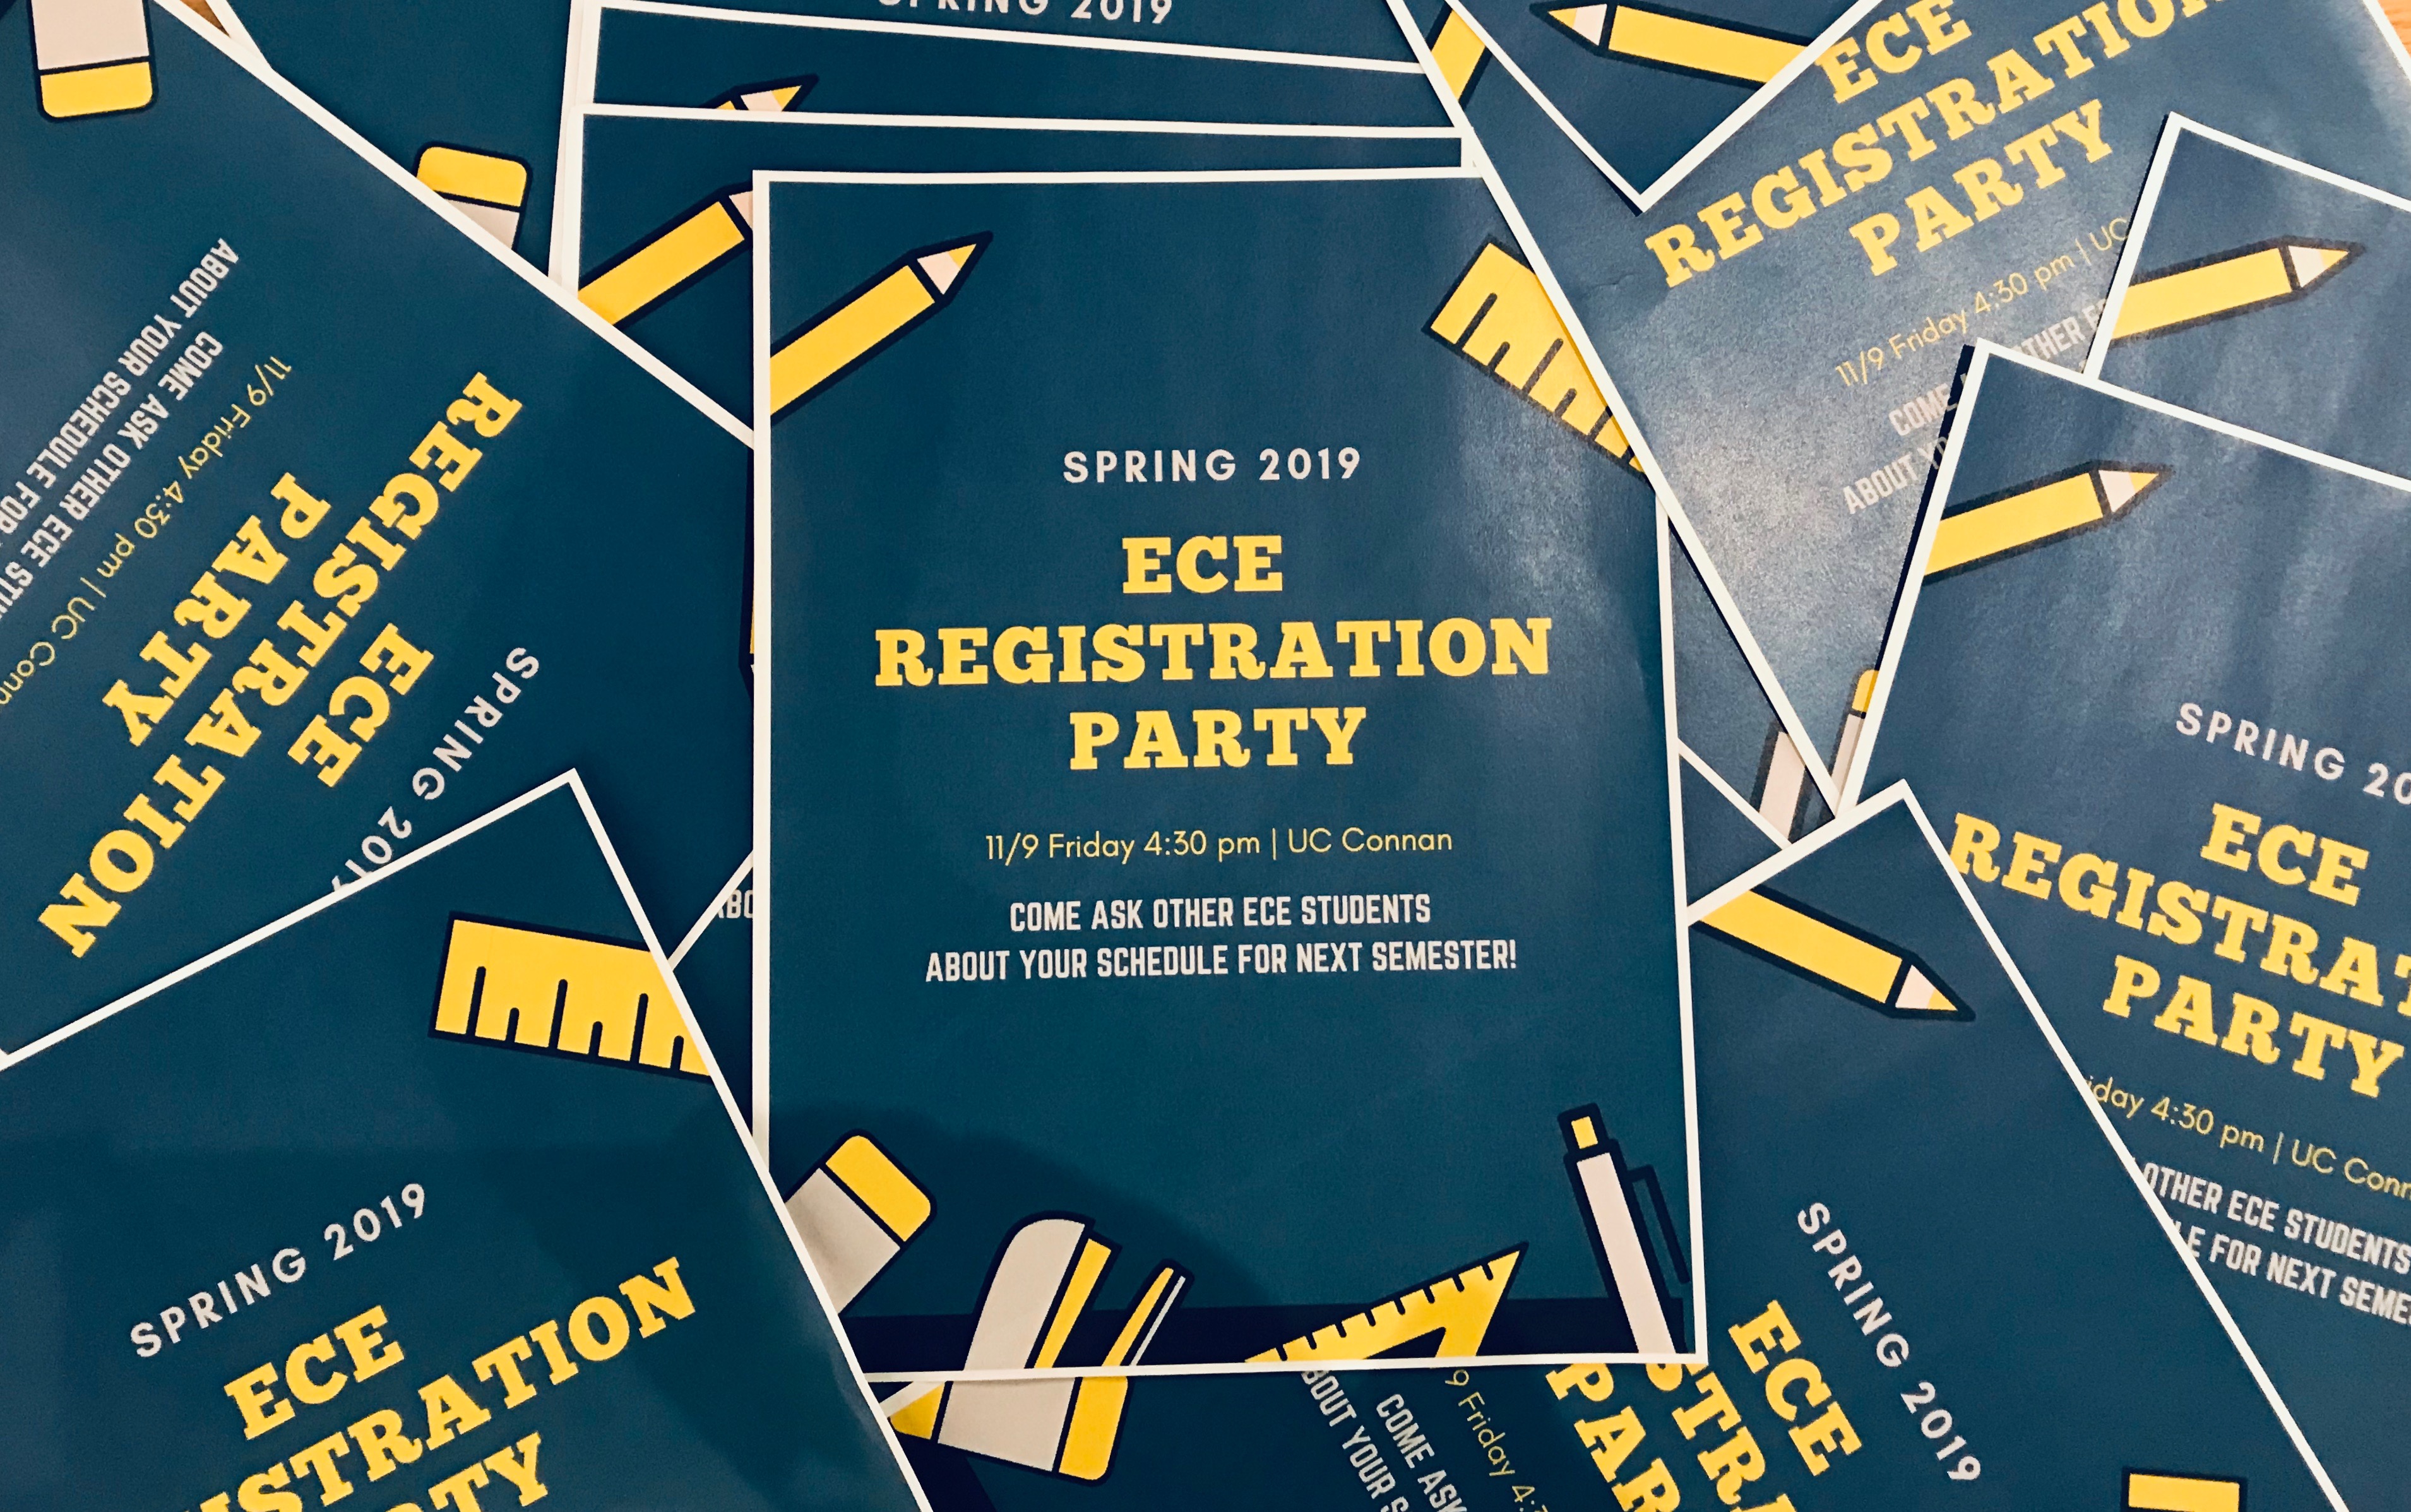 2018 Fall ECE Registration Party flyer design